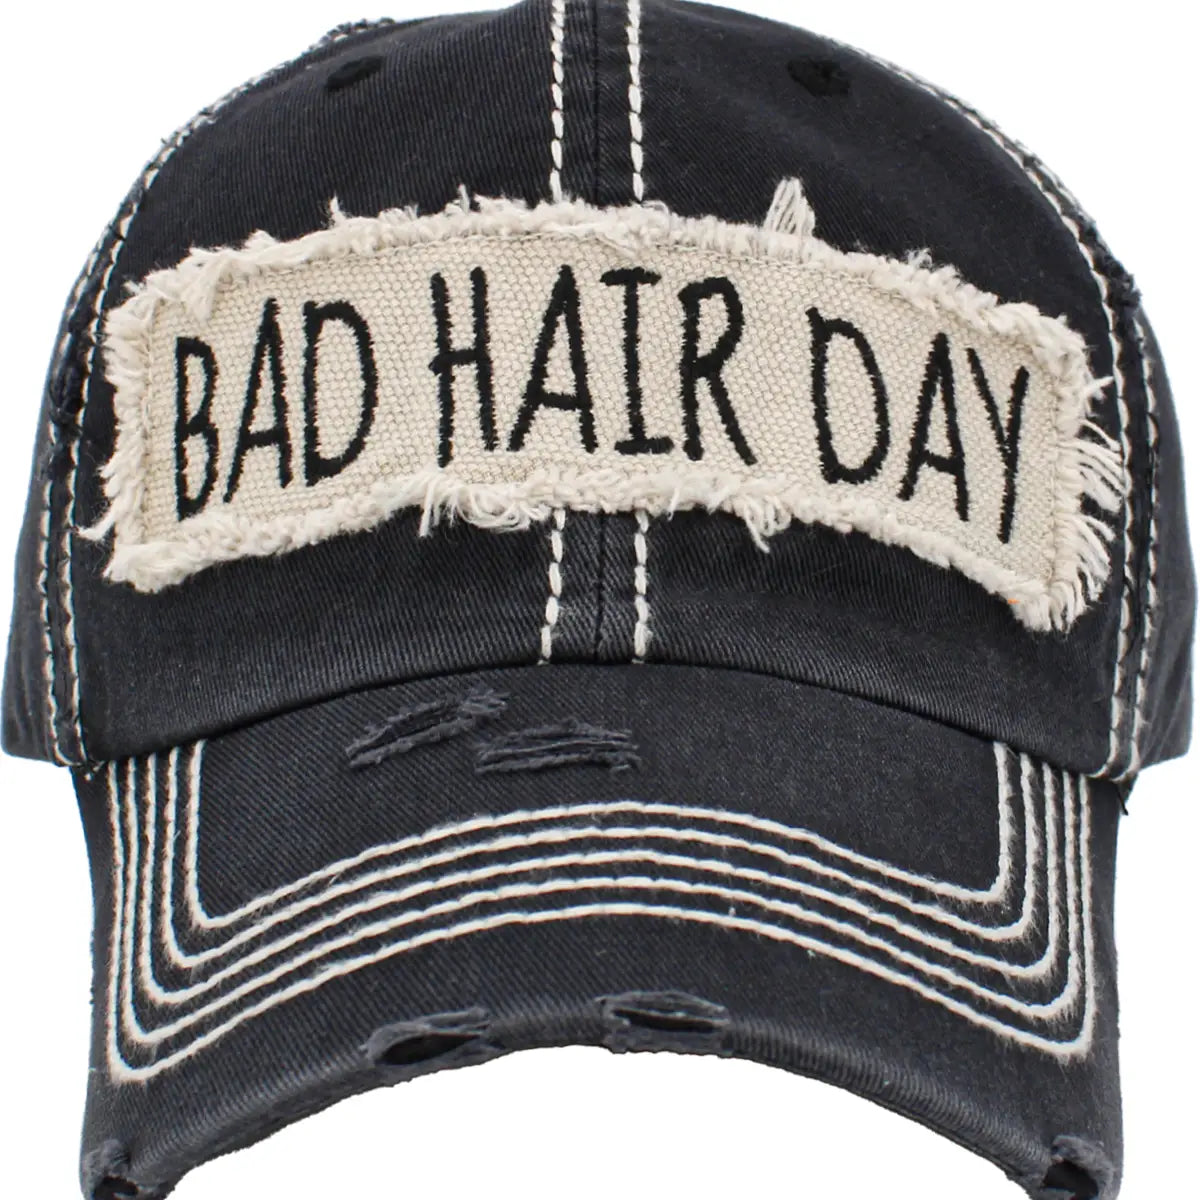 Bad Hair Day Baseball Cap